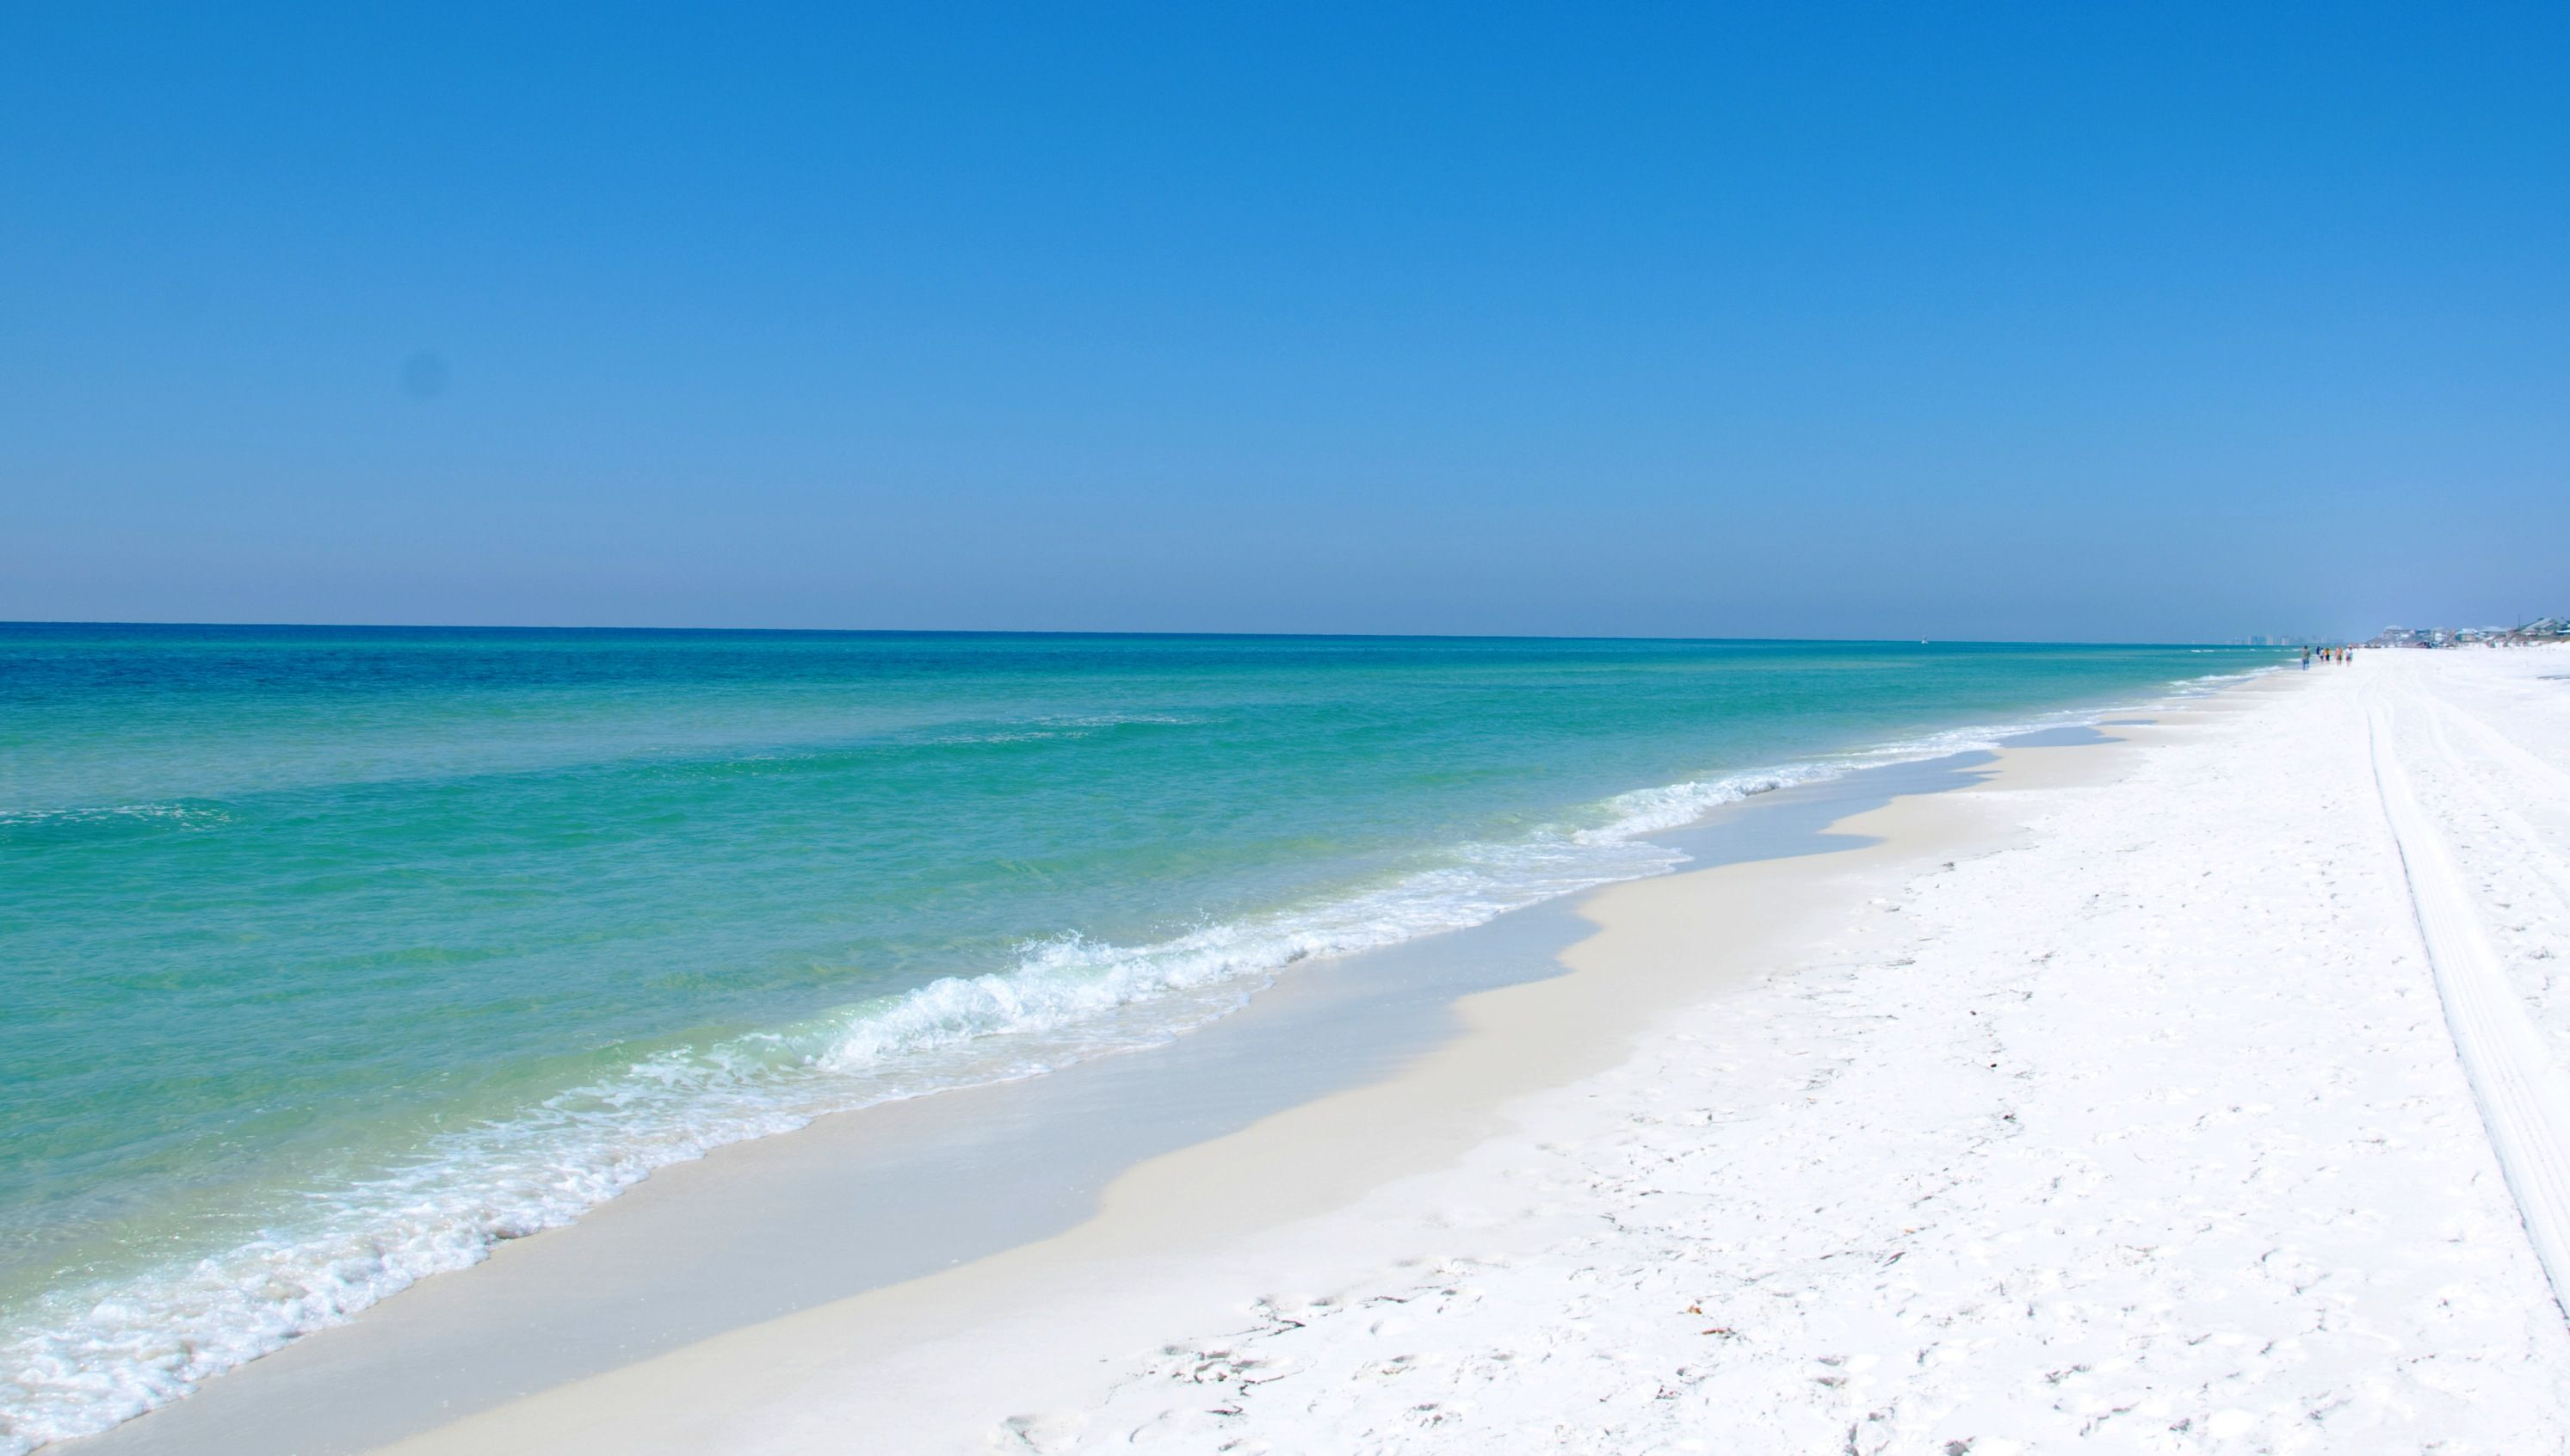 2986x1692 8 Favorite Destinations (East Coast Edition) | Beach pictures, Pensacola beach, Beach